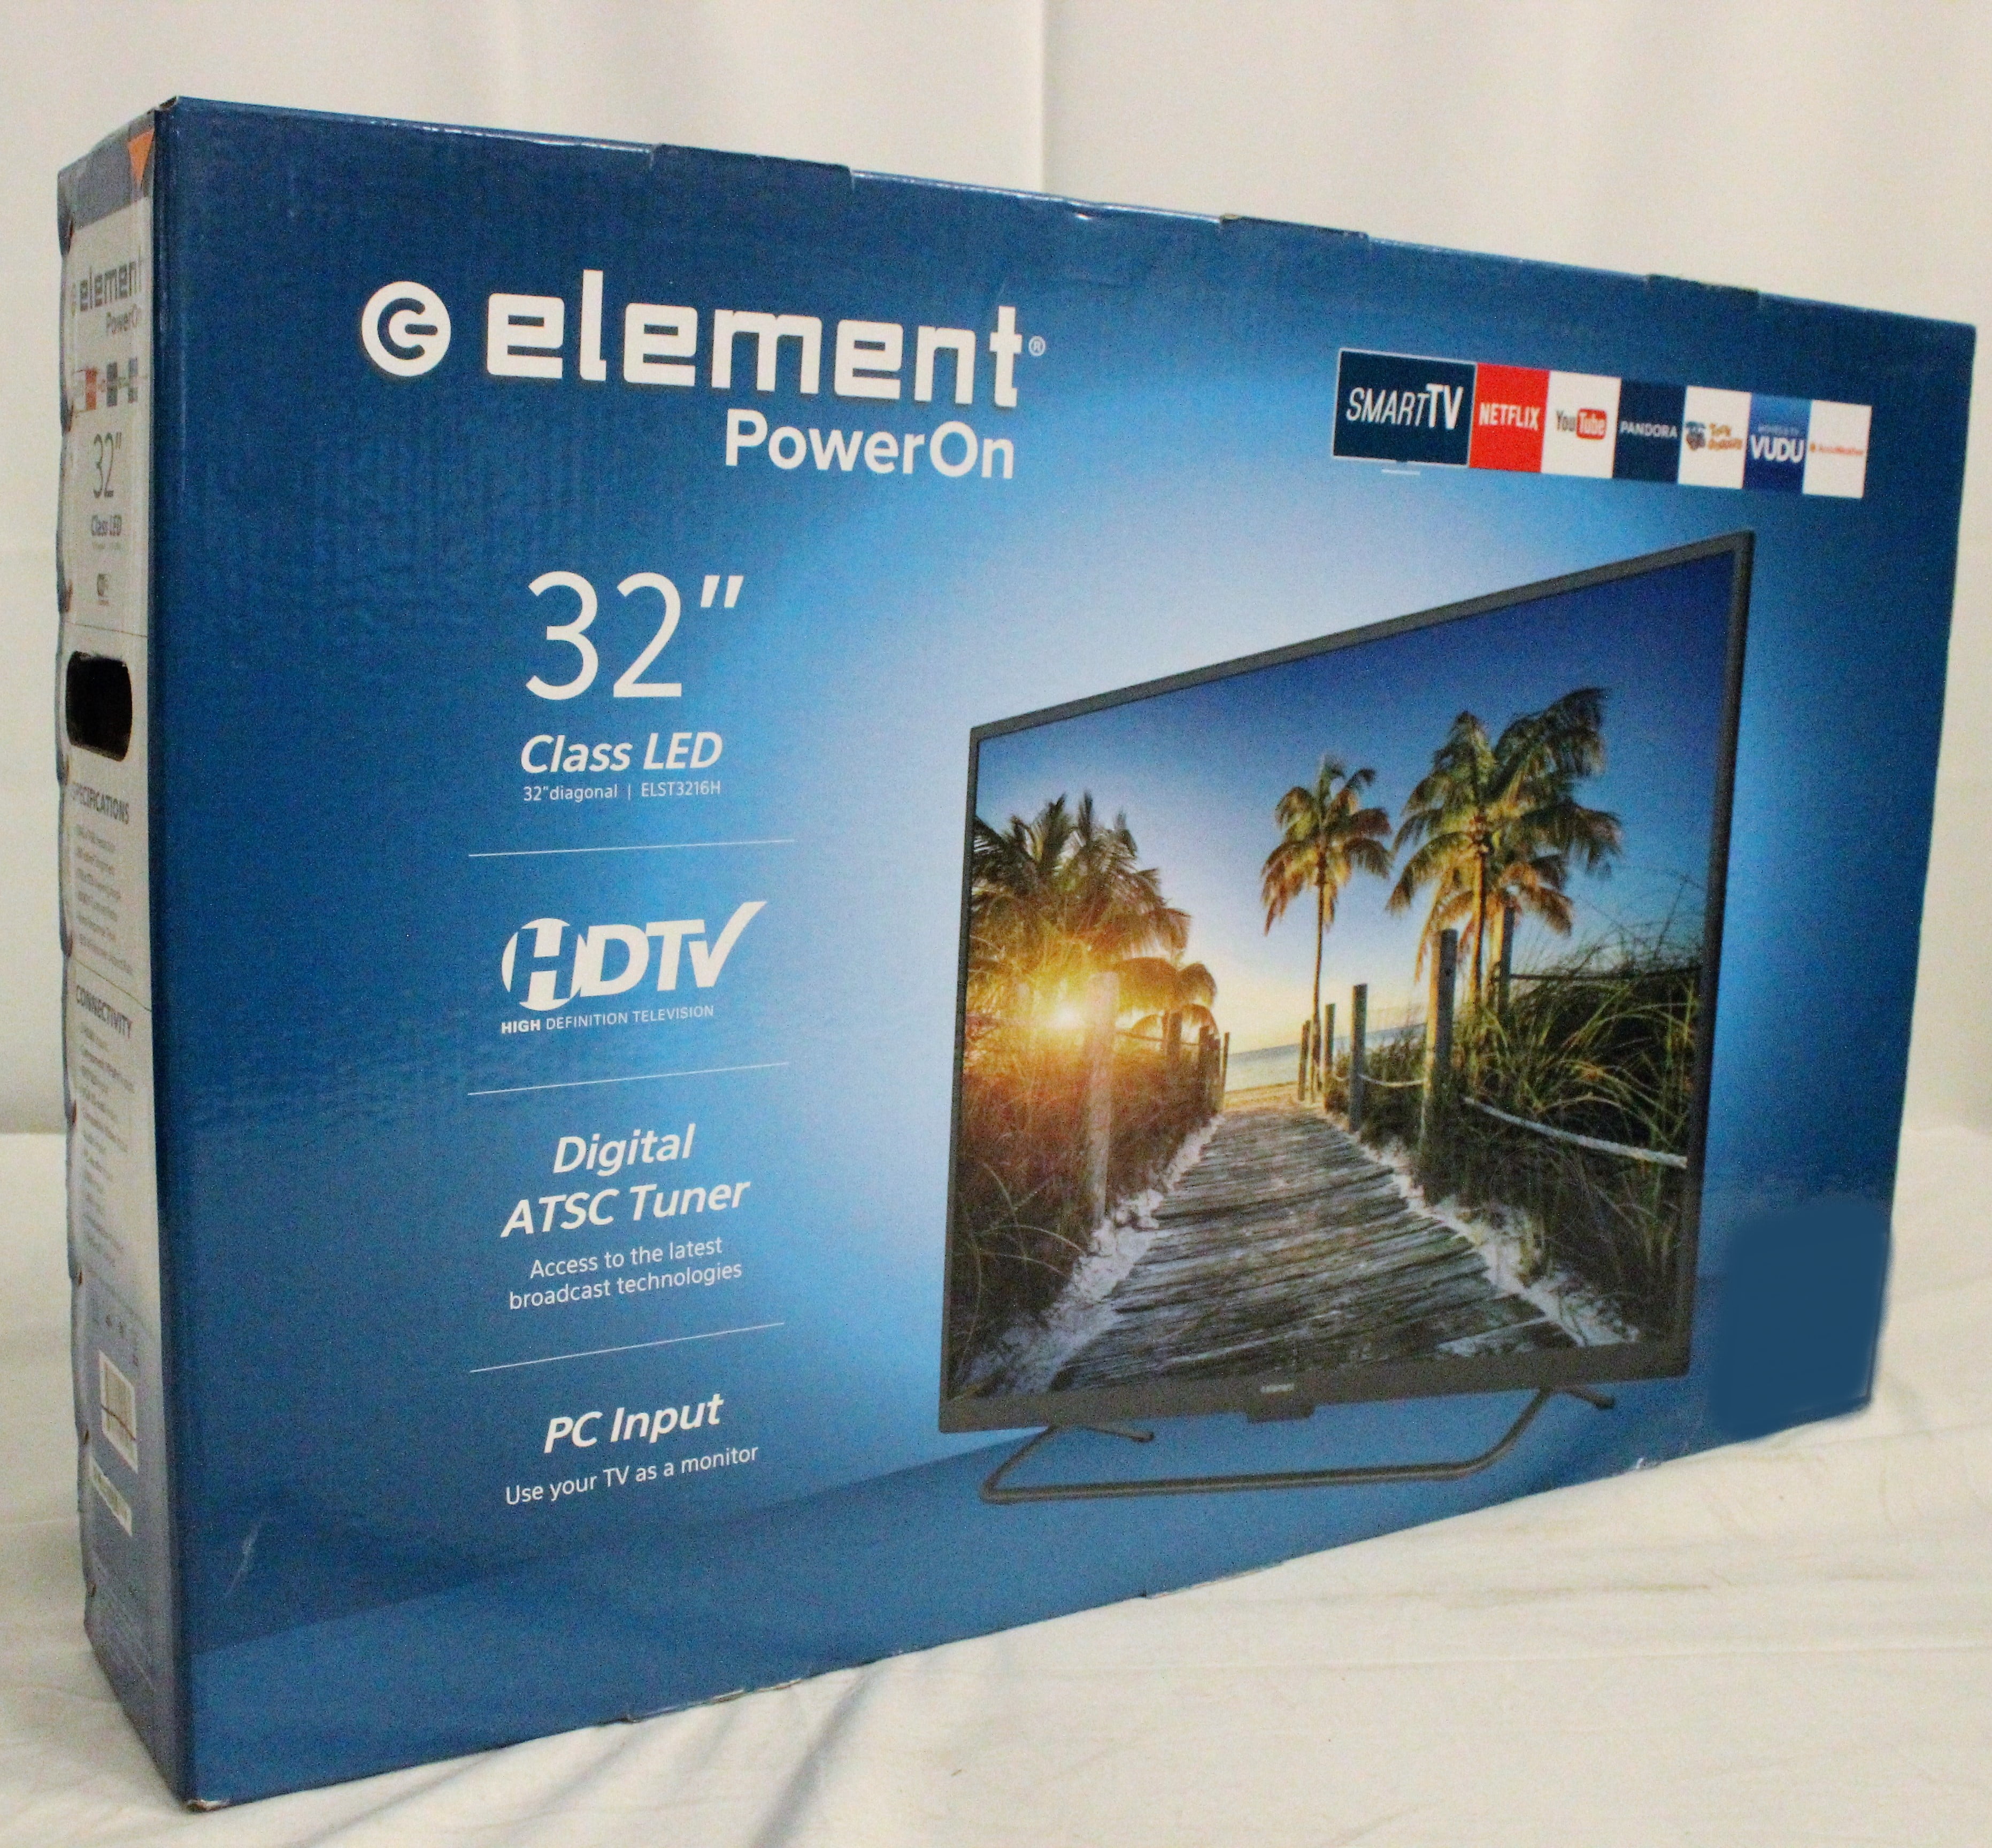 element 39 inch tv specs